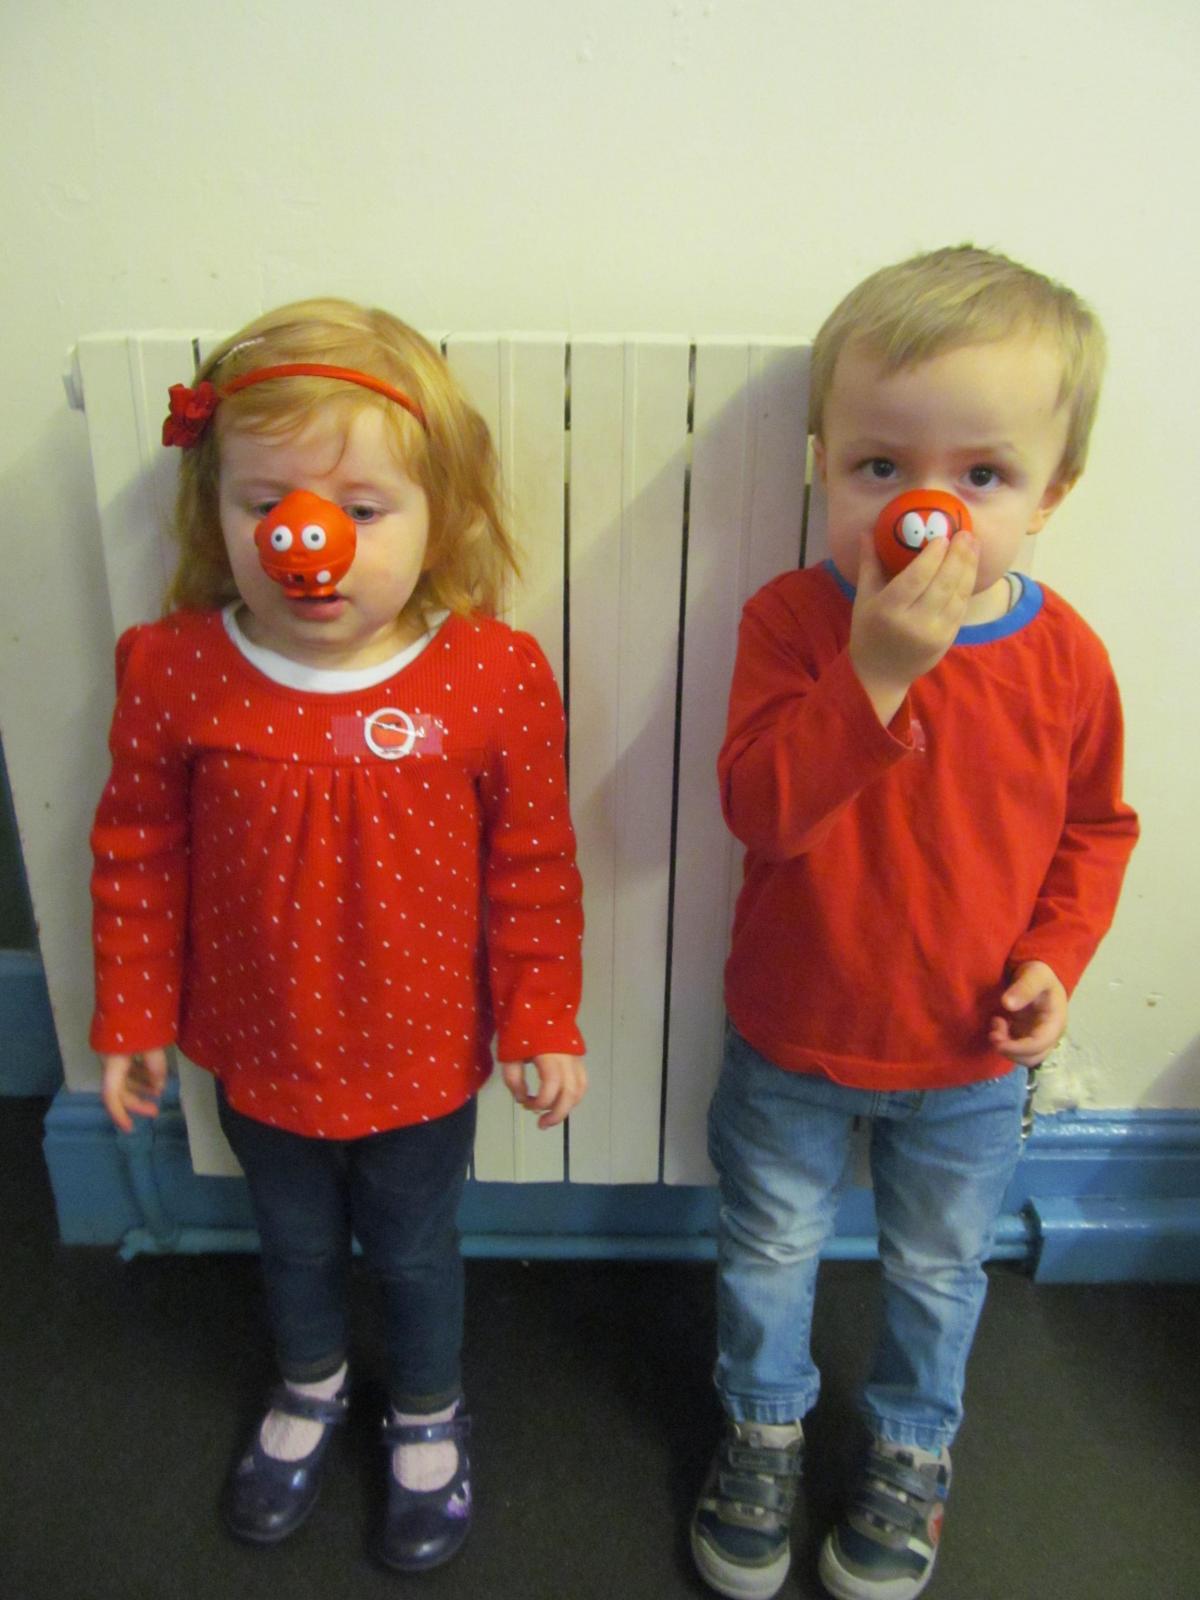 Children at Little Trinity Nursery, in Birmingham Road, dressed in red